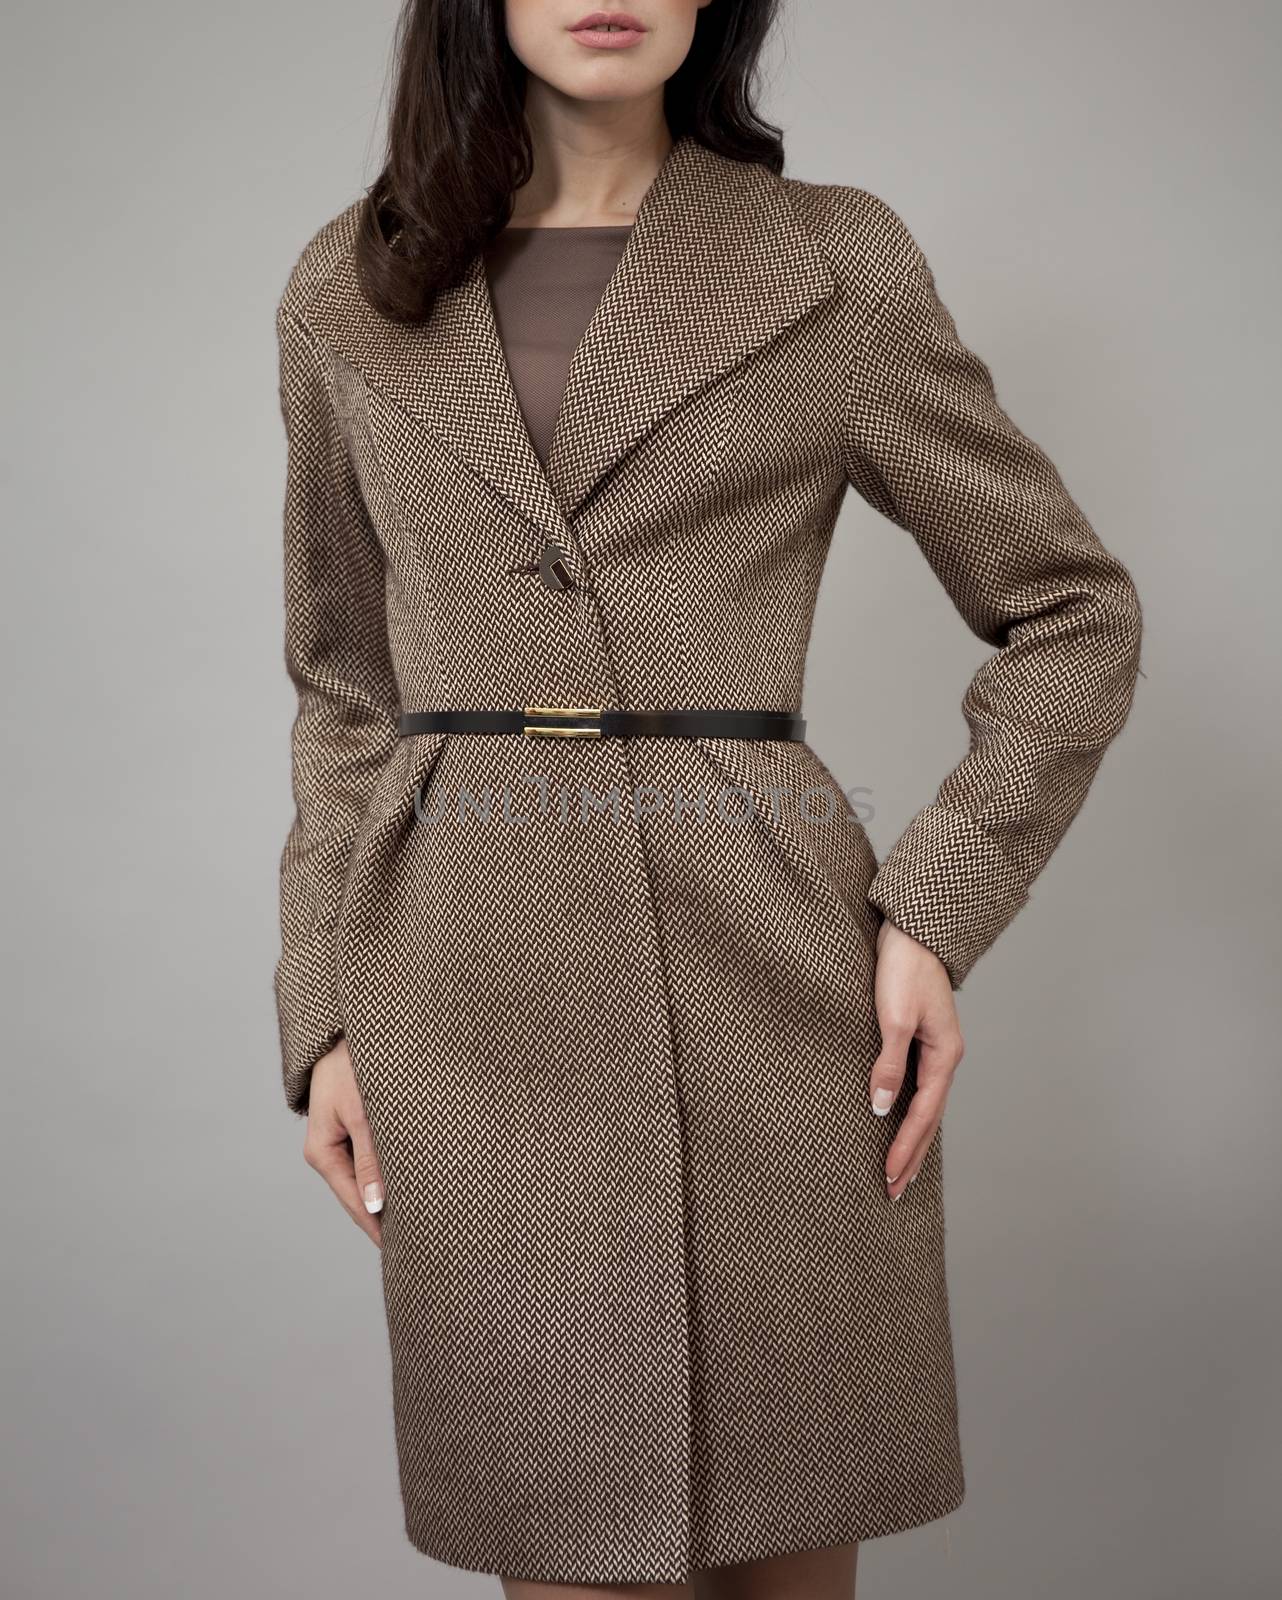 Female autumn coat against gray background